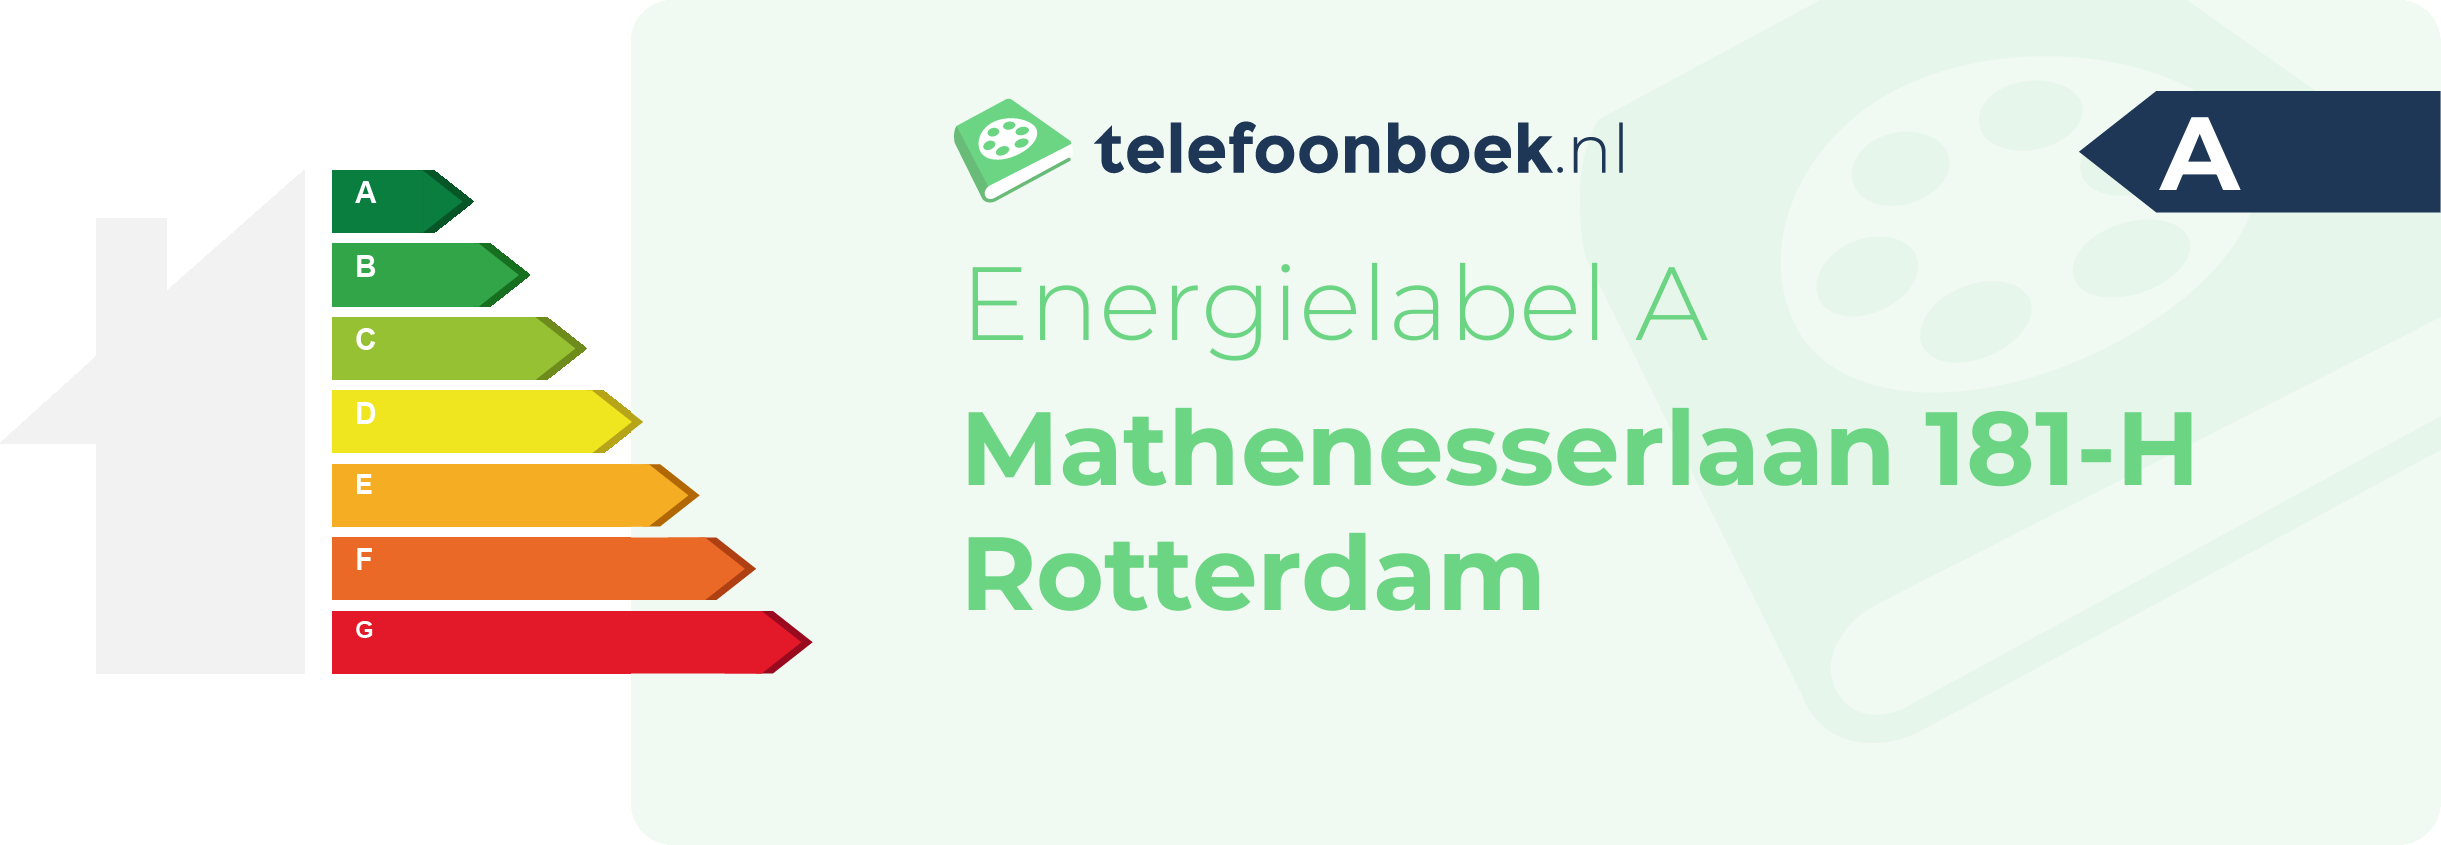 Energielabel Mathenesserlaan 181-H Rotterdam